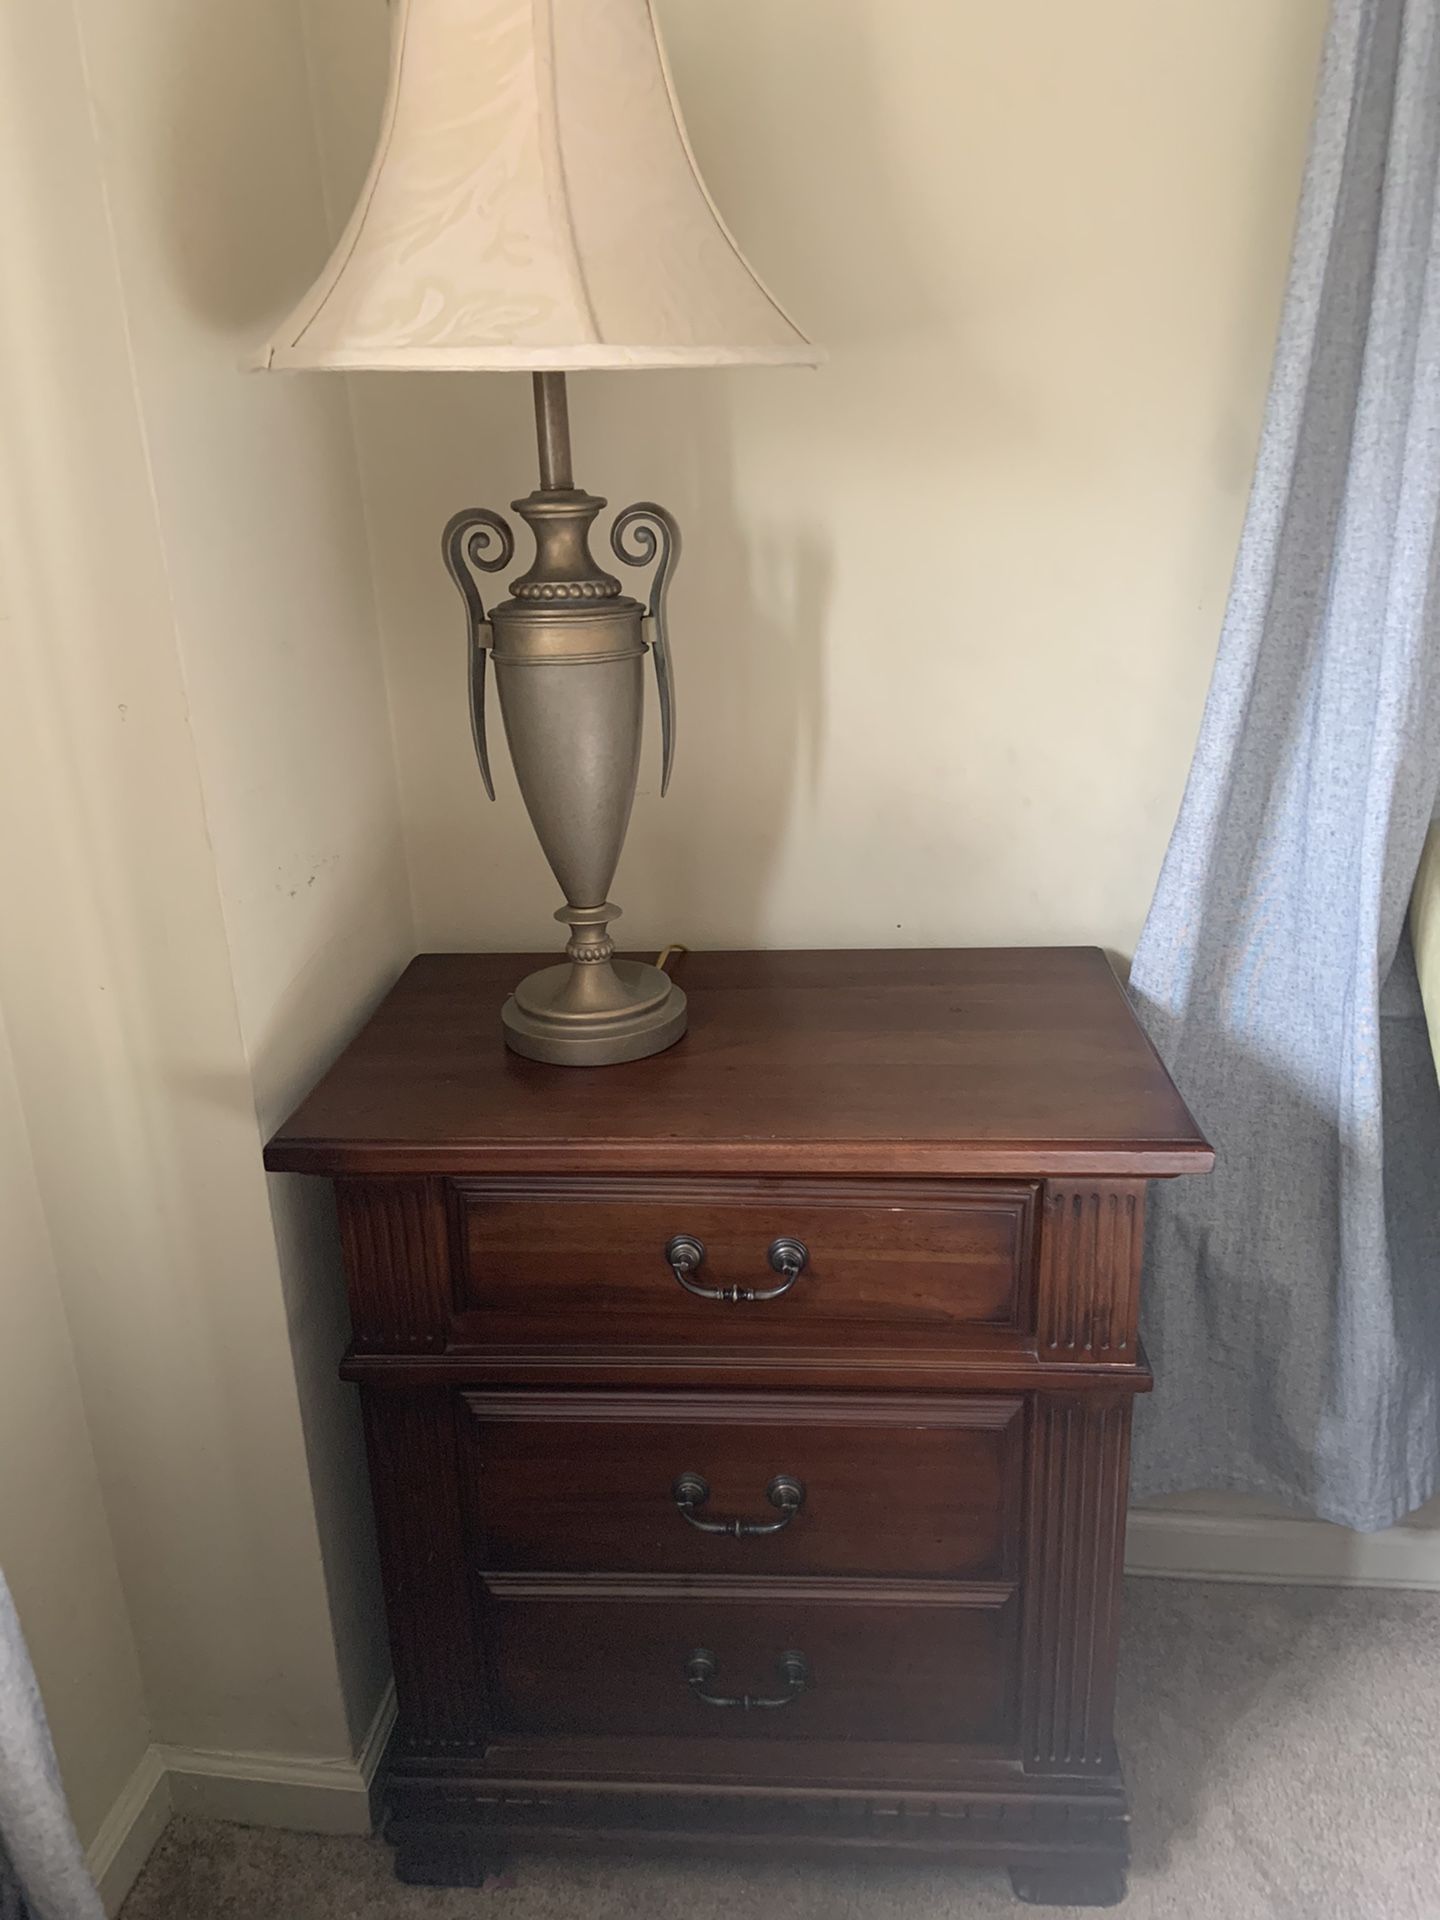 Dresser and lamp